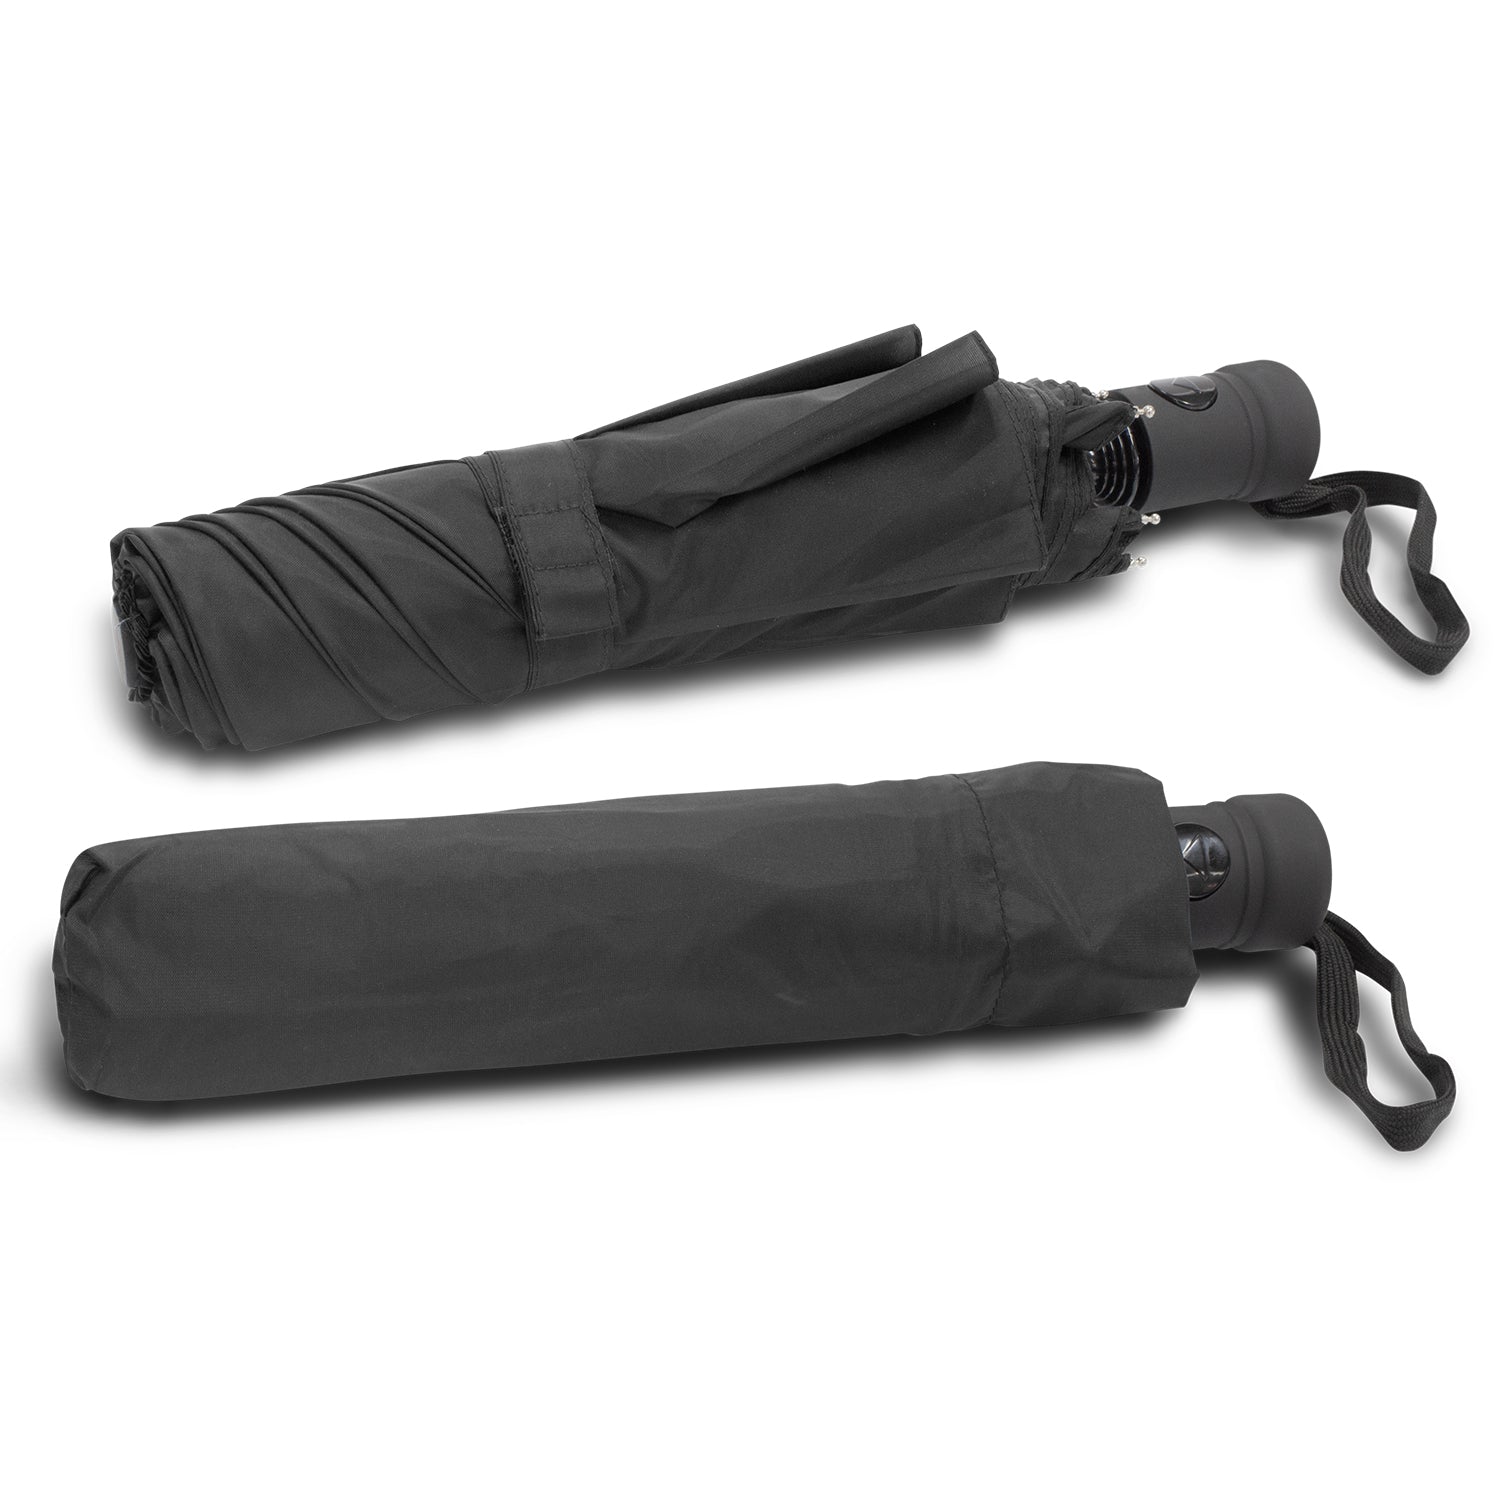 PEROS-TRI-FOLD-COMPACT-Umbrella-Compact-Travel-Umbrella-collapsible-steel-shaft-black-2